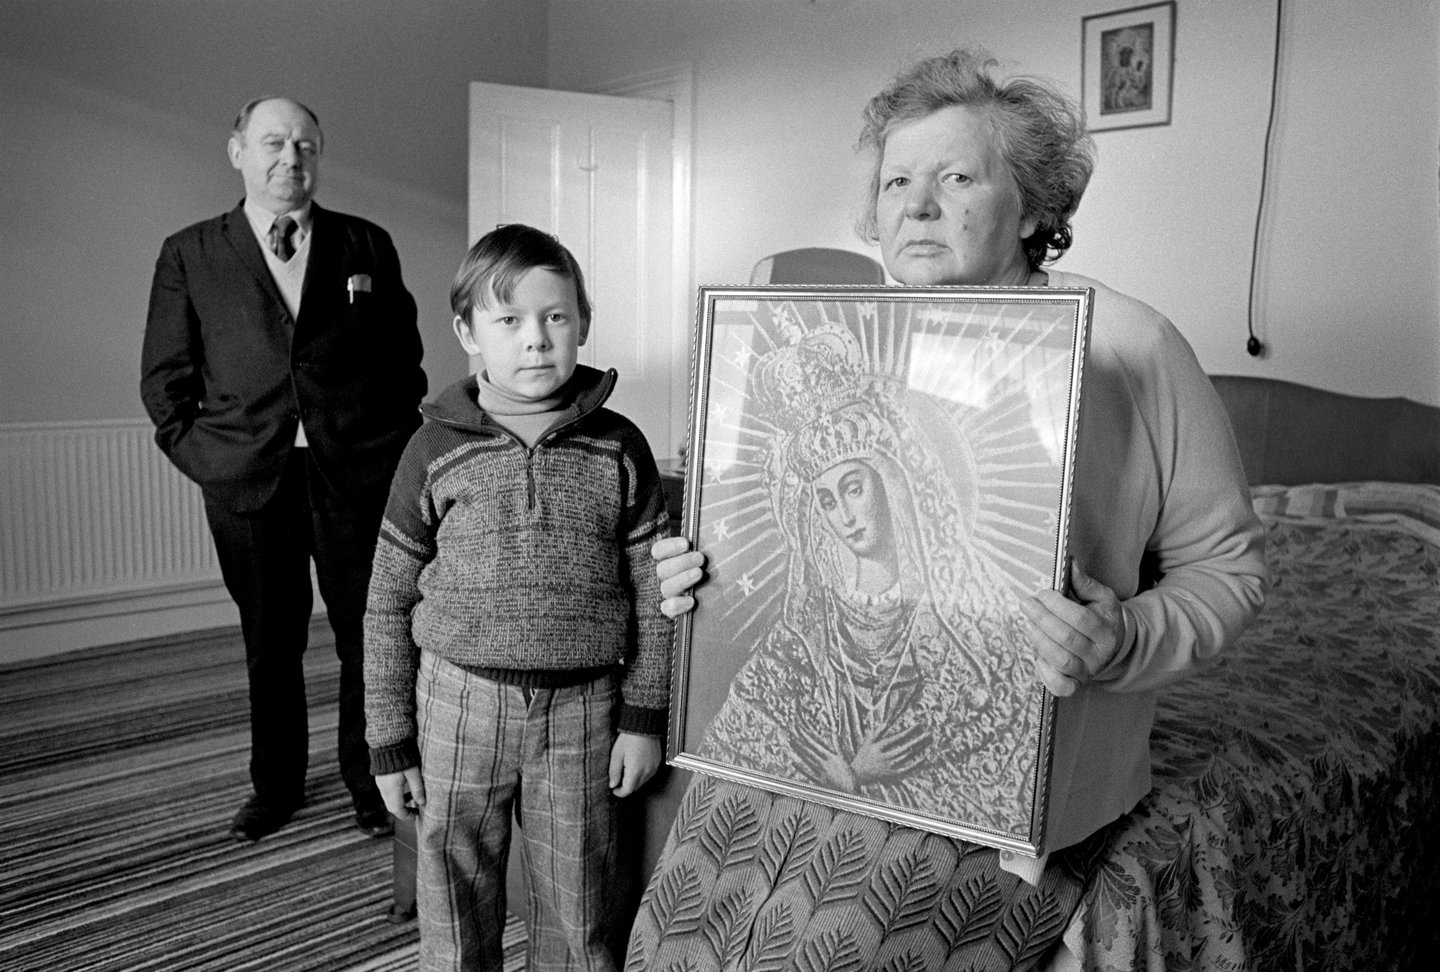 Between 1974-1981, Czesław Siegieda documented a polish community in the East Midlands